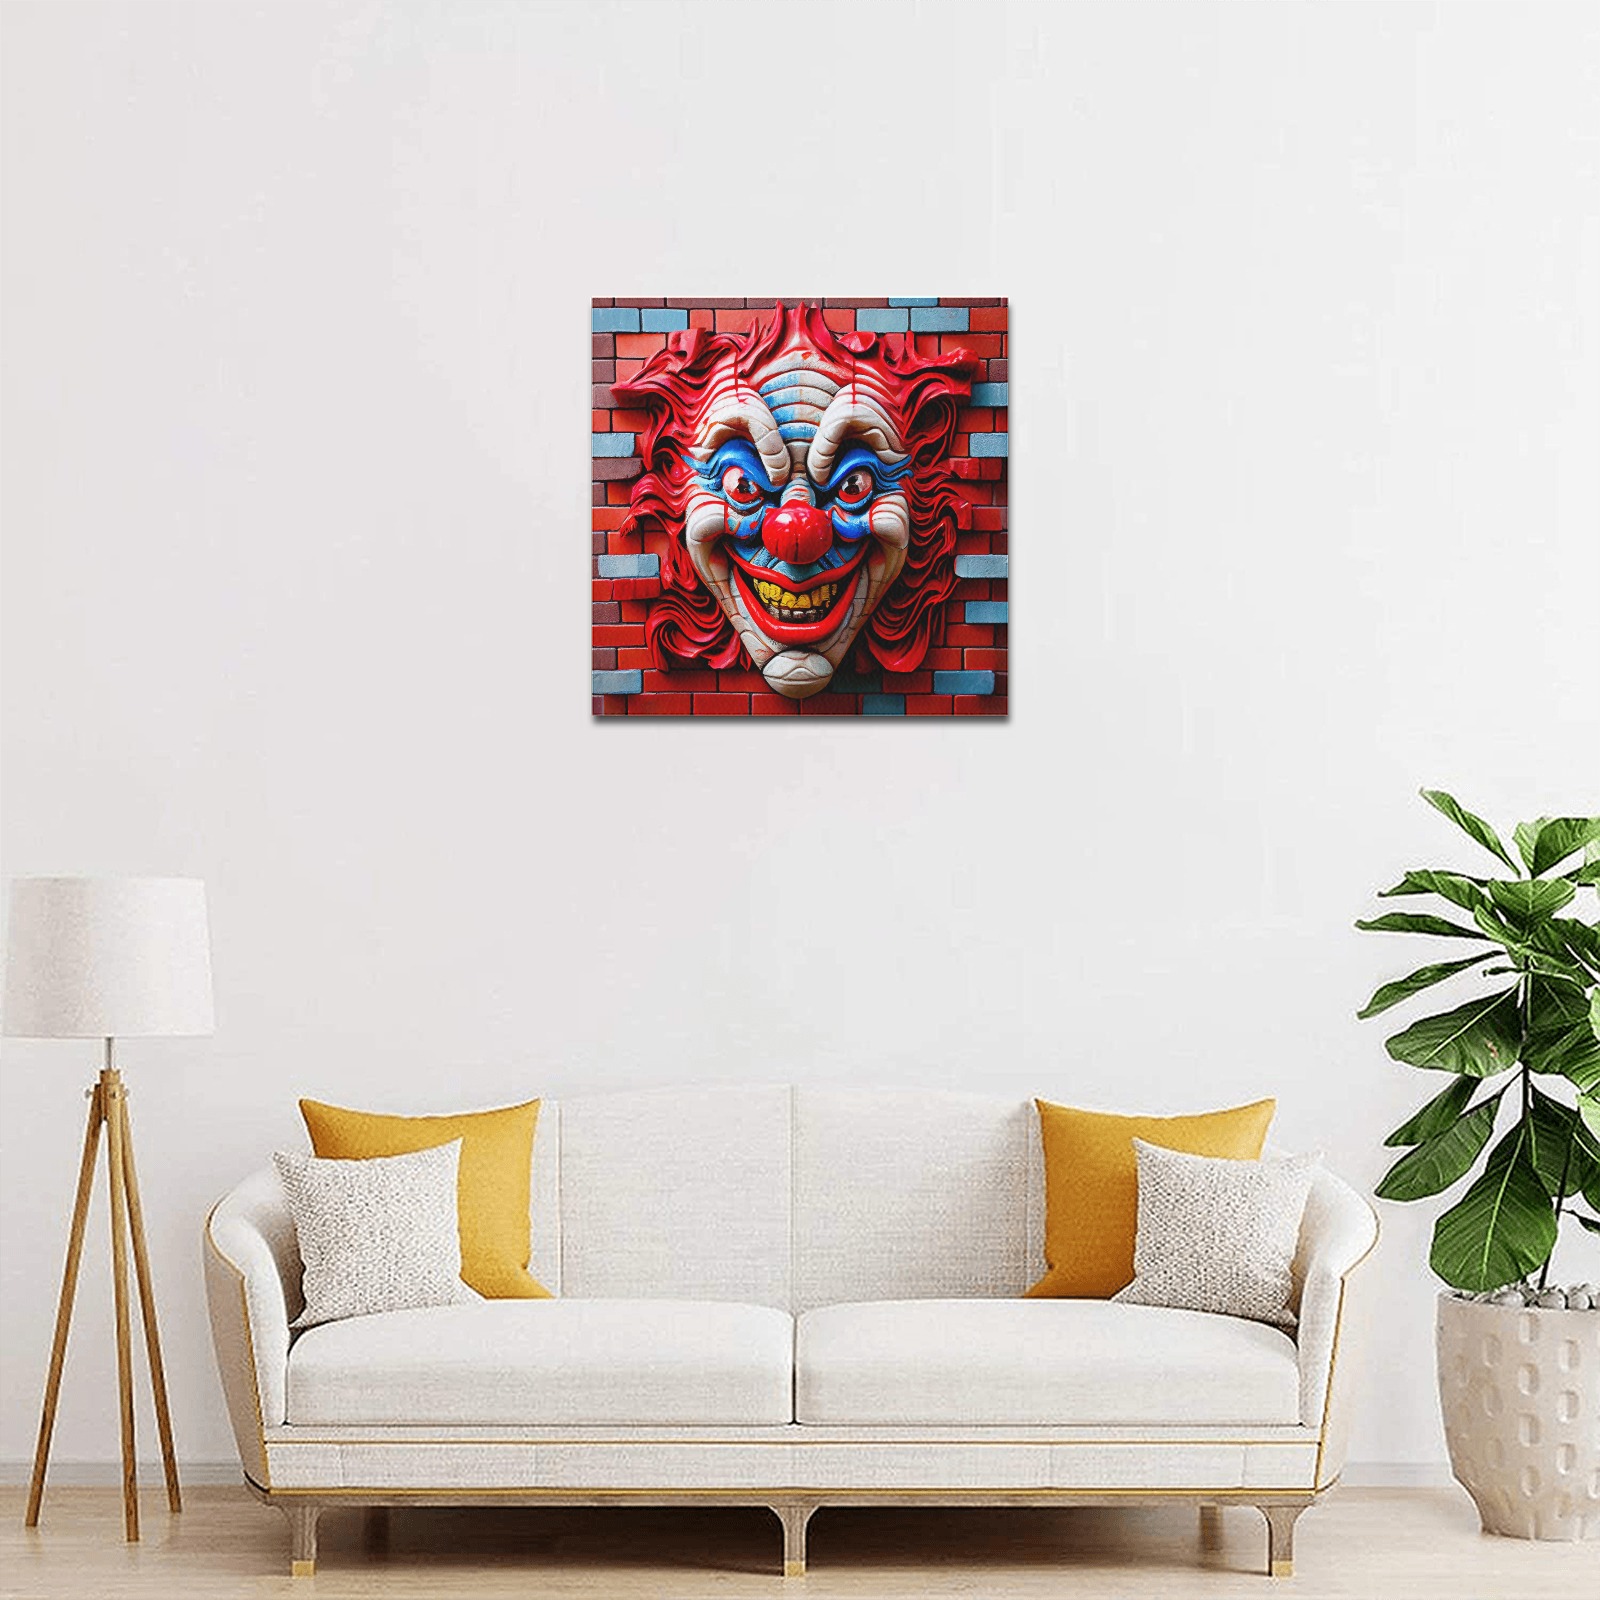 creepy clown face 3/4 Upgraded Canvas Print 16"x16"